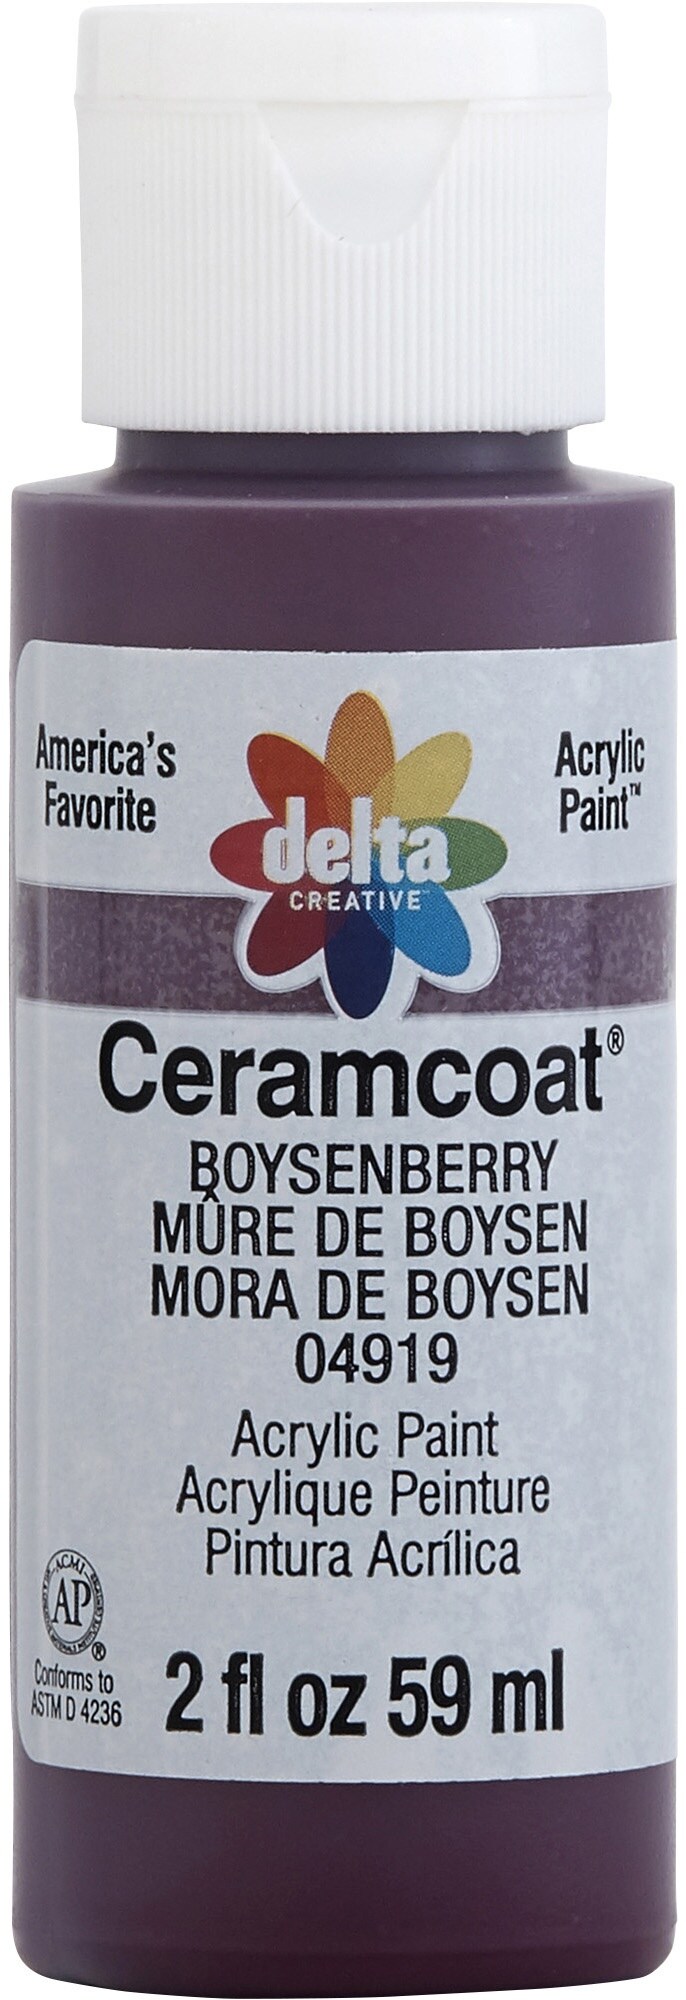 2 fl oz Acrylic Craft Paint Pretty Pink - Delta Ceramcoat